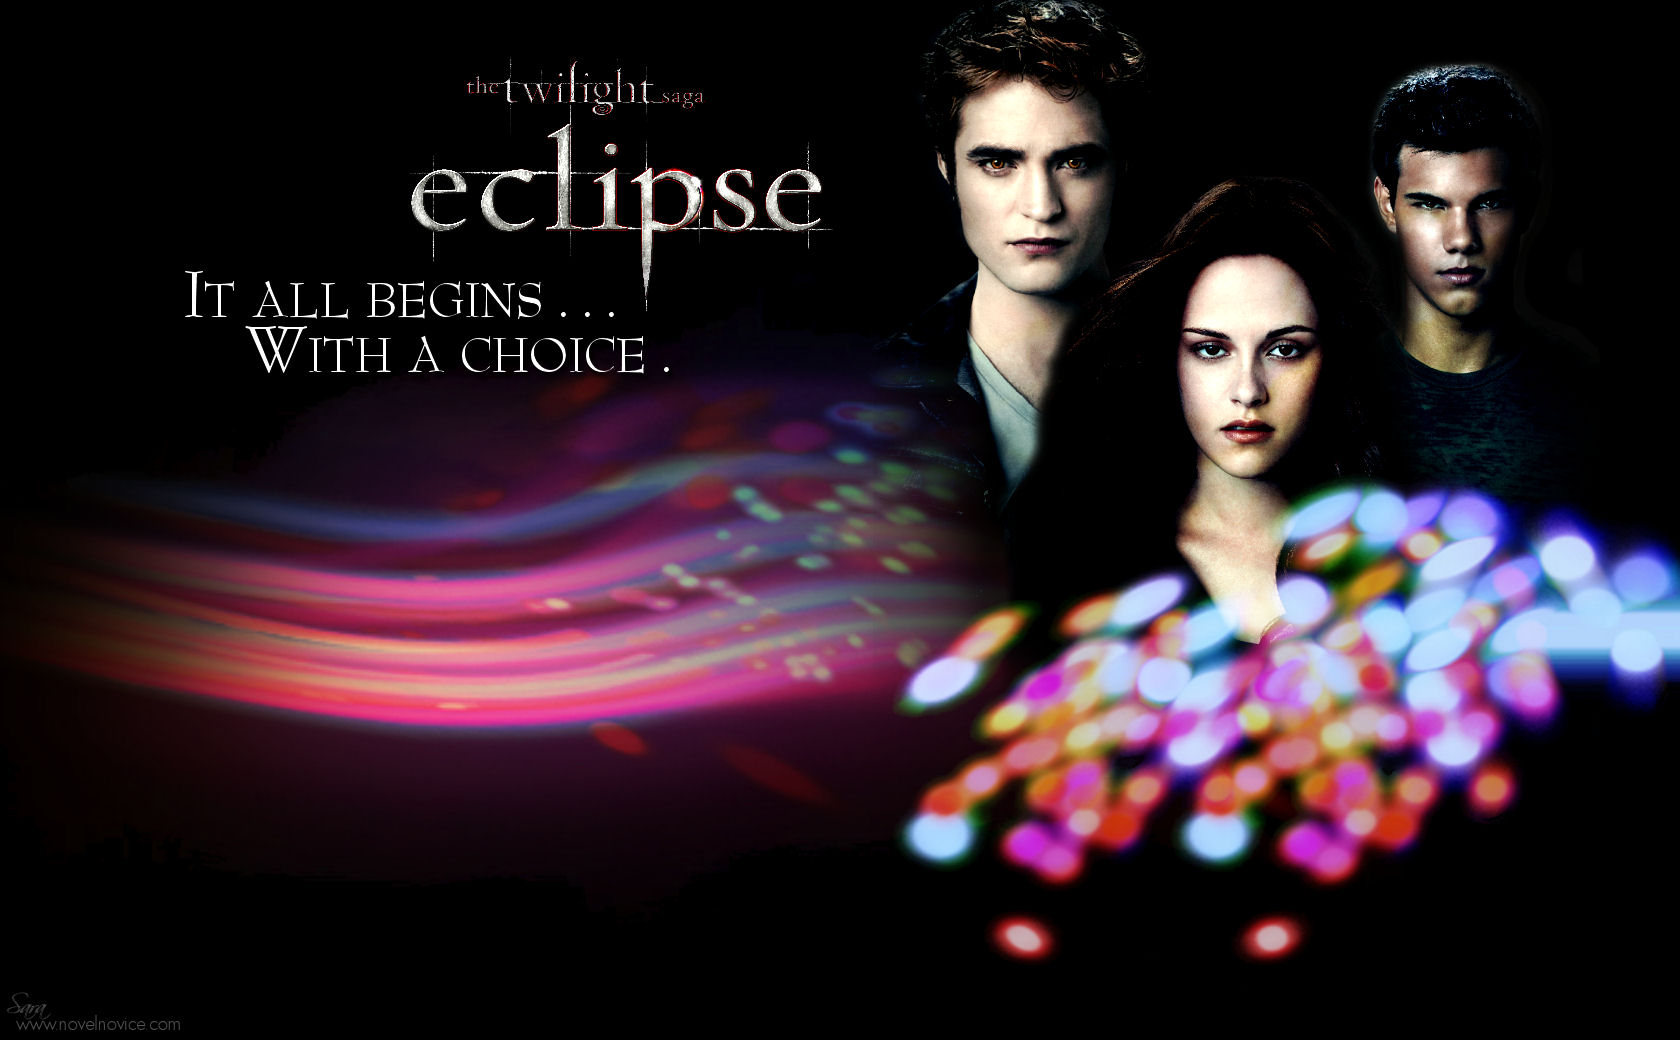 The Twilight Saga: Eclipse: More